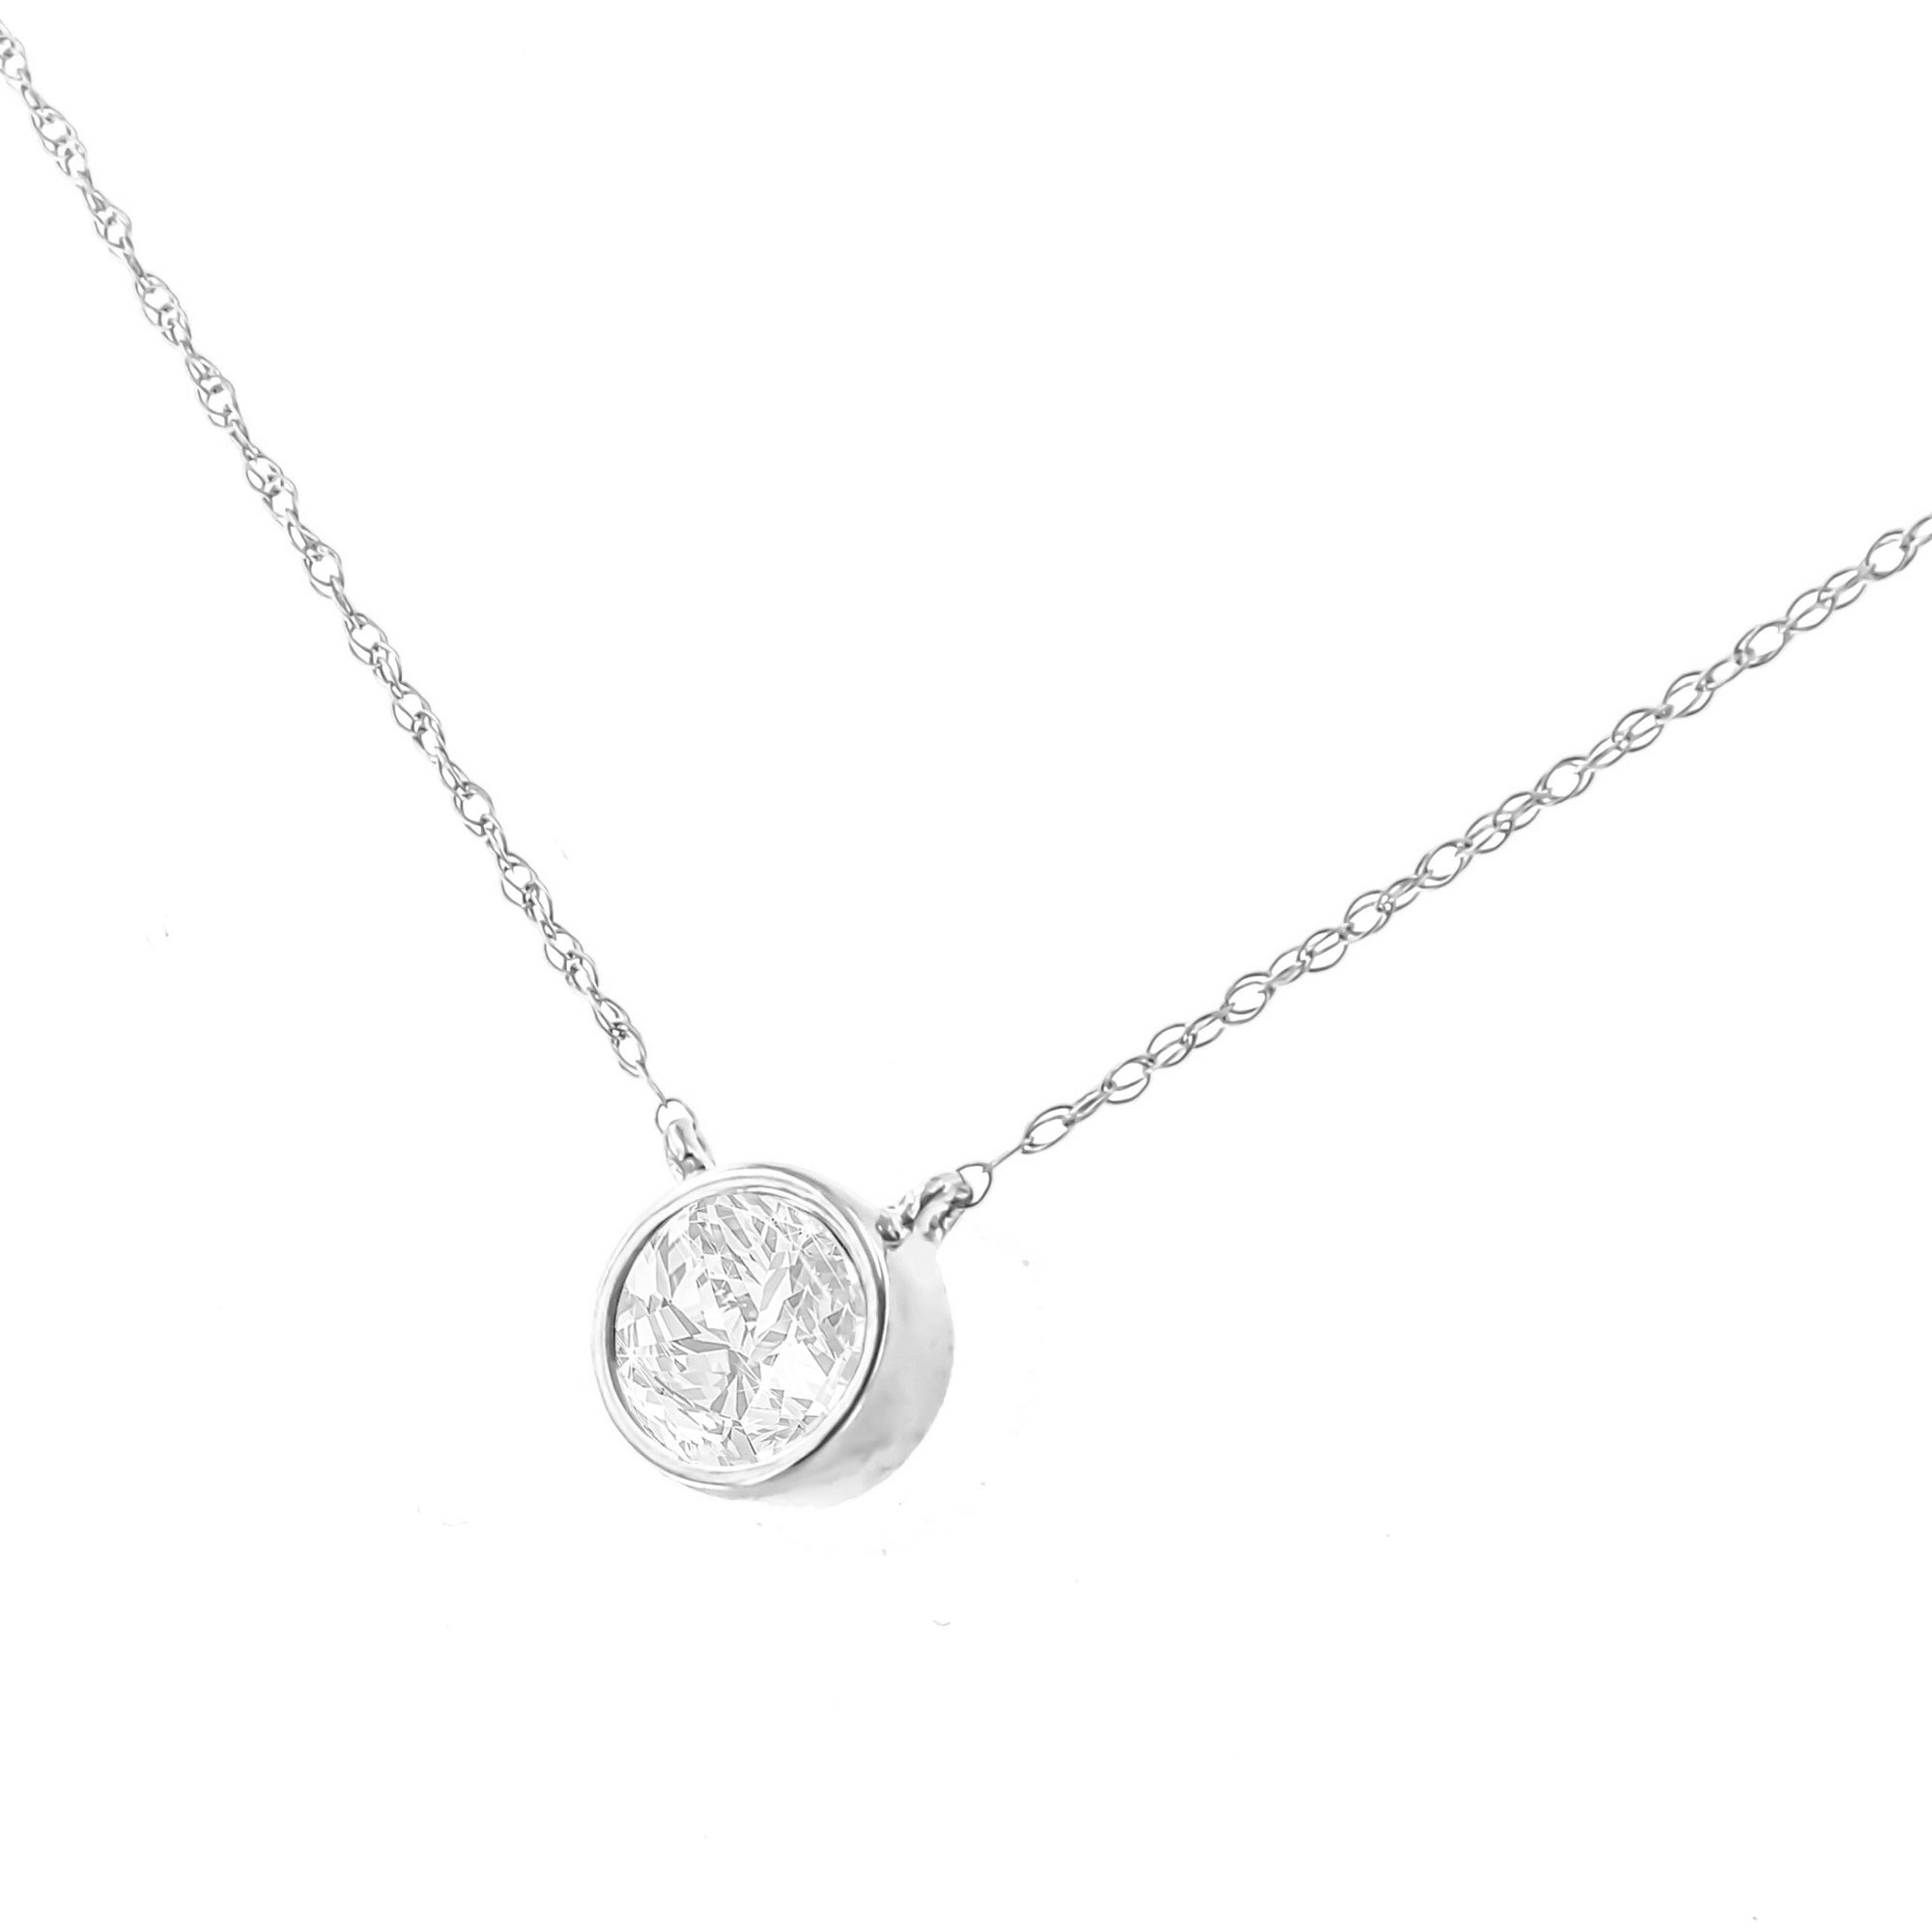 10K White Gold 1/3 Cttw Round-Cut Diamond Bezel 18" Pendant Necklace (J-K Color, I1-I2 Clarity) - LinkagejewelrydesignLinkagejewelrydesign